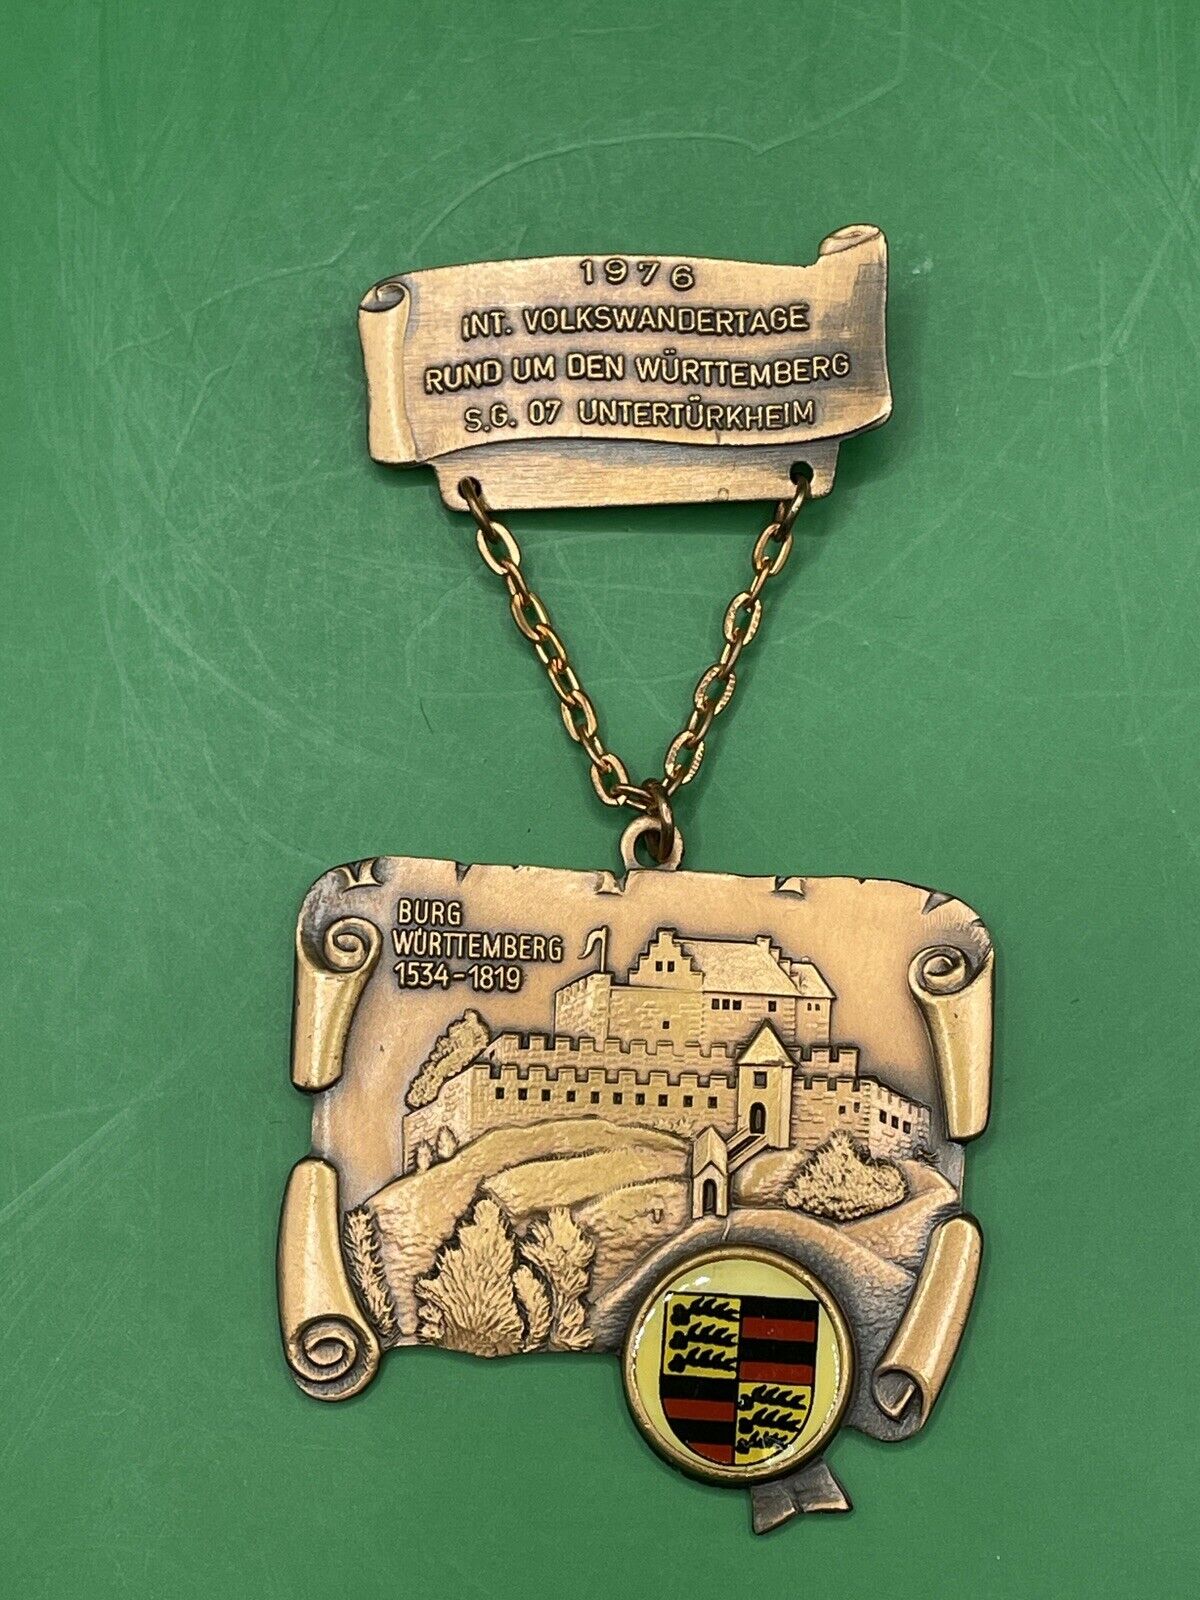 Vintage German Hiking Medal 1976 Int Volkswandertage Rund Um Den Wurttemberg